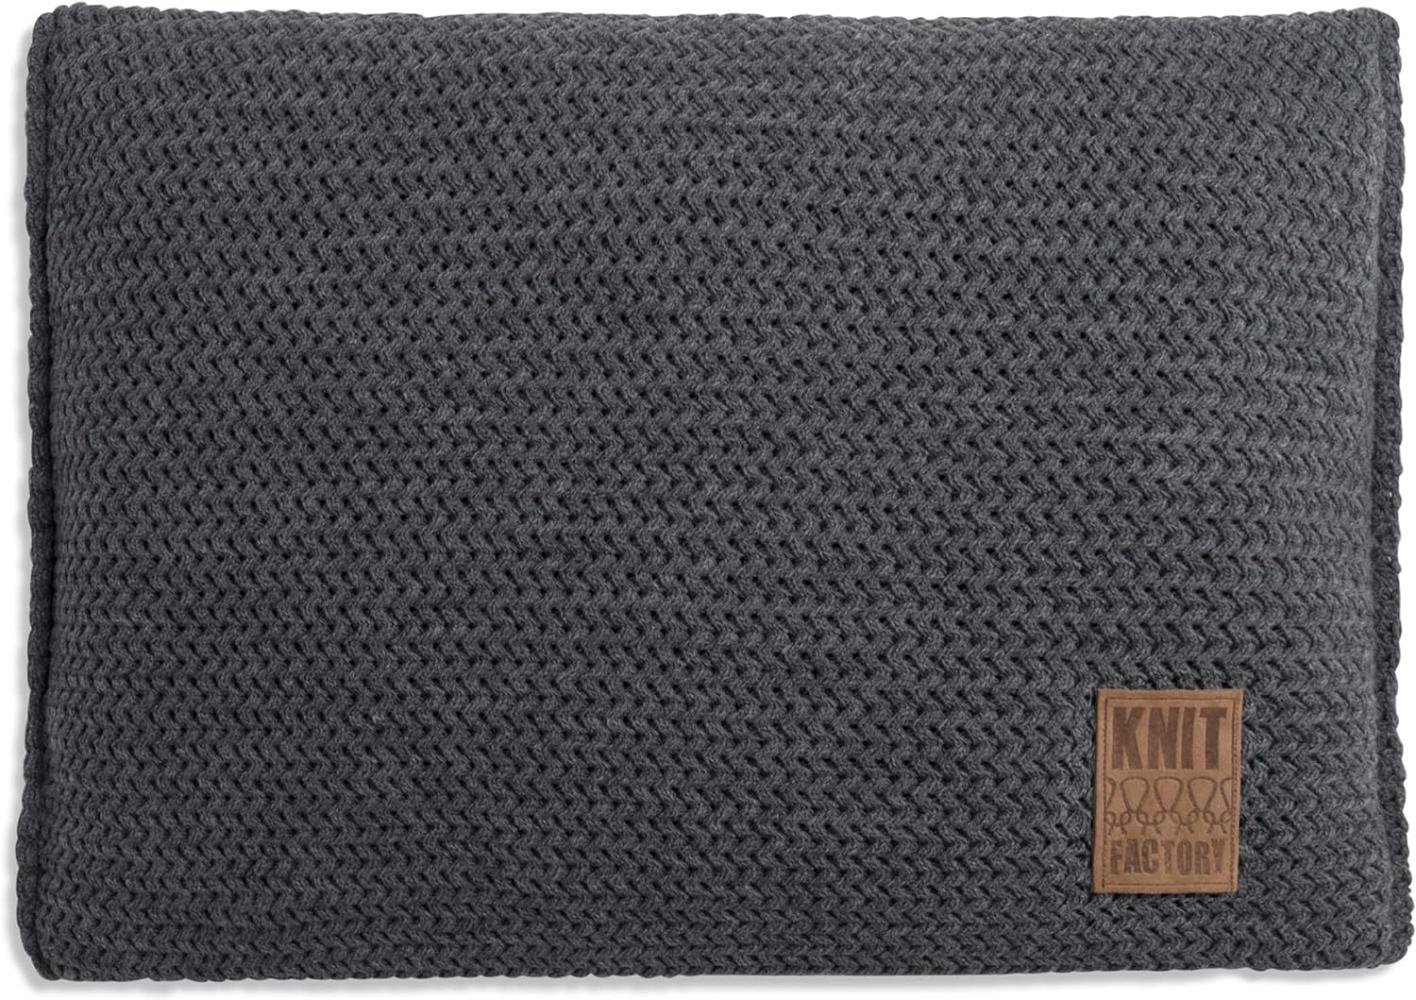 Knit Factory Maxx Kissen 60x40 cm Glatt Anthrazit Bild 1